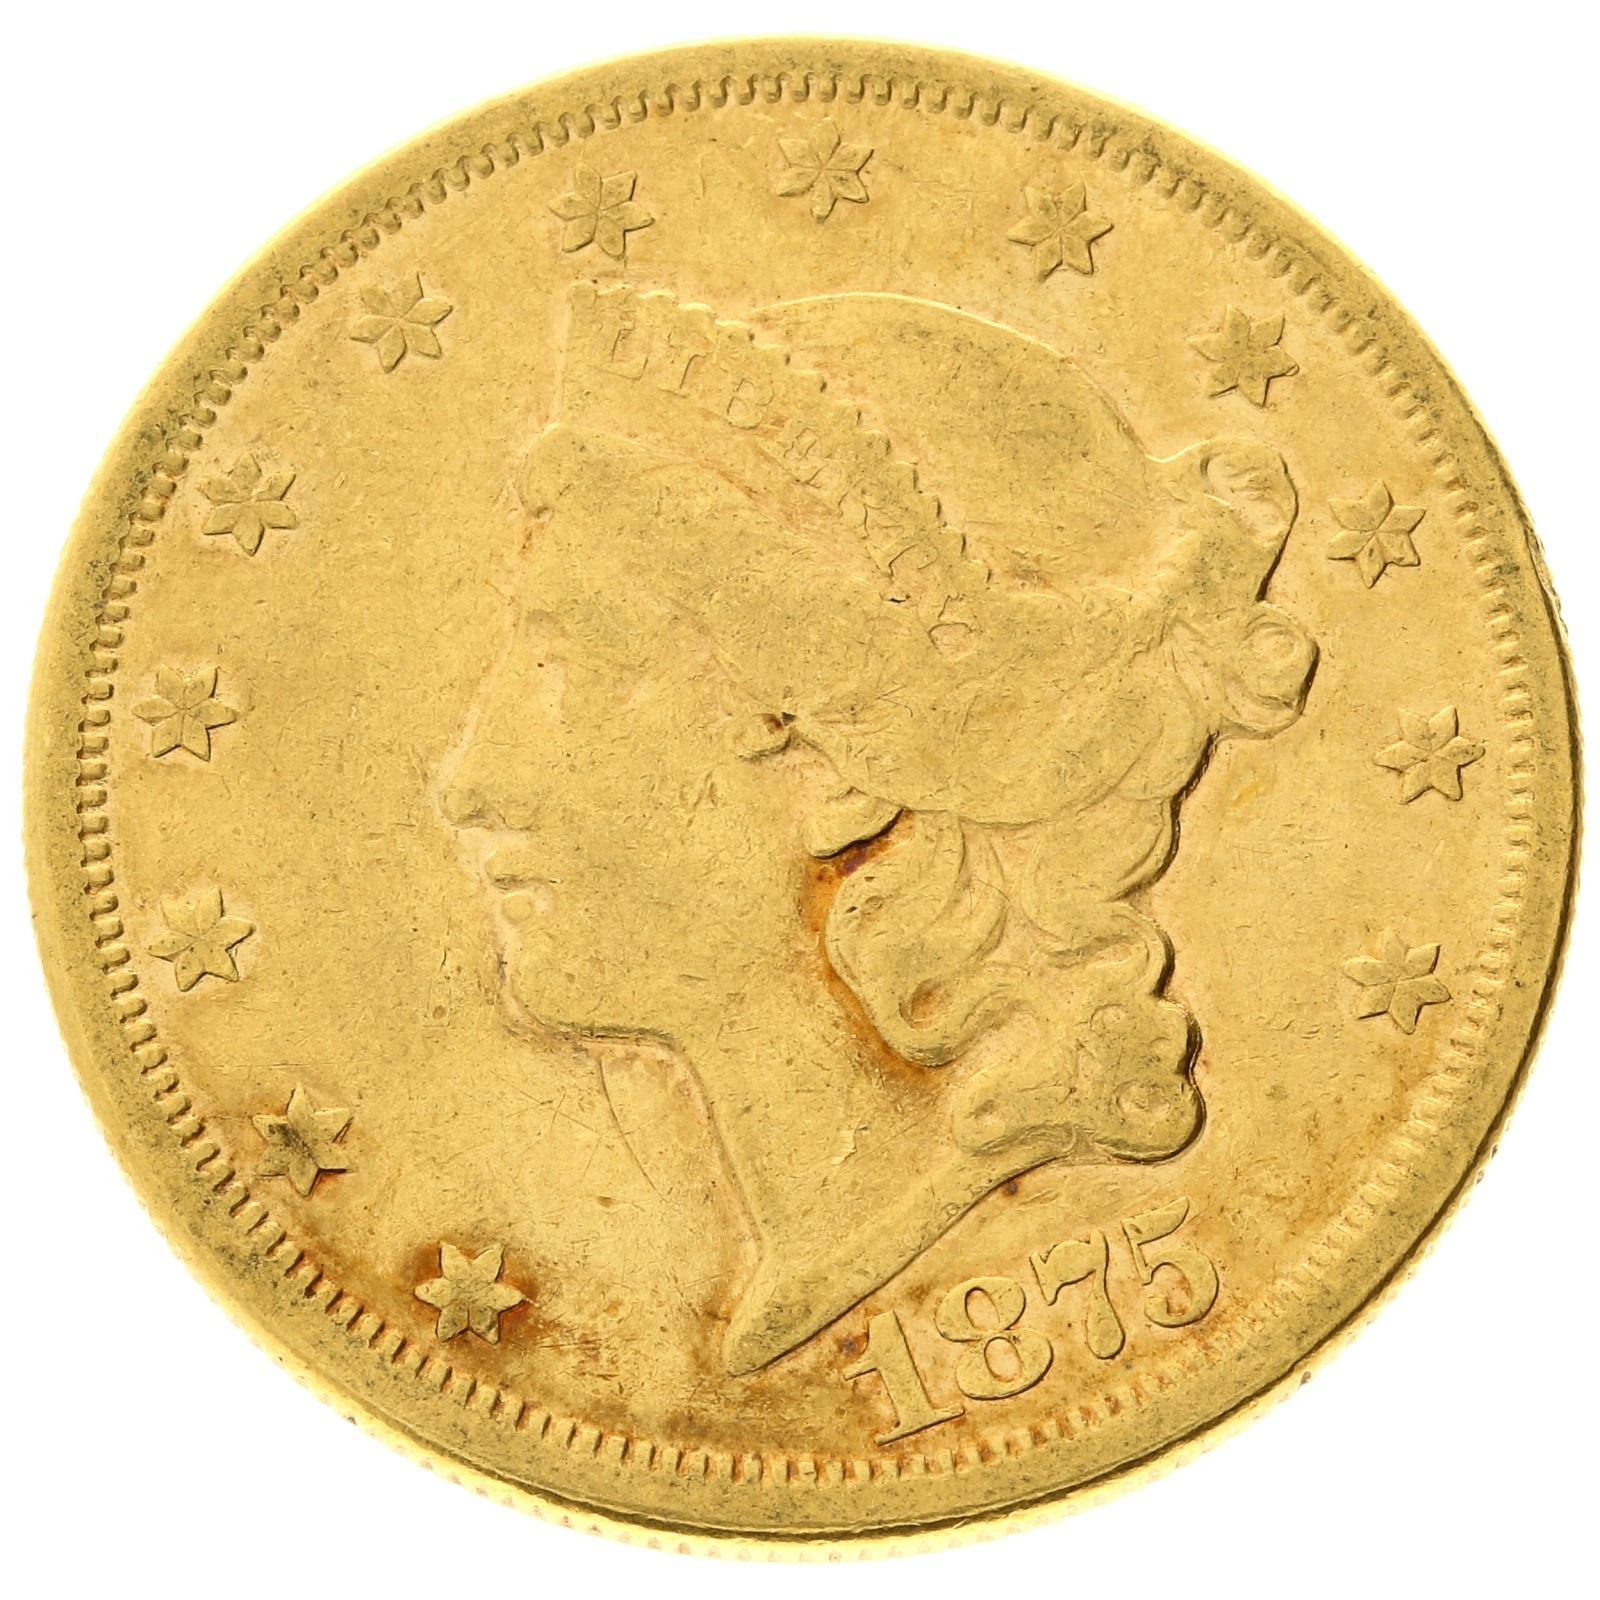 USA - 20 dollars 1875 - S - Liberty head 